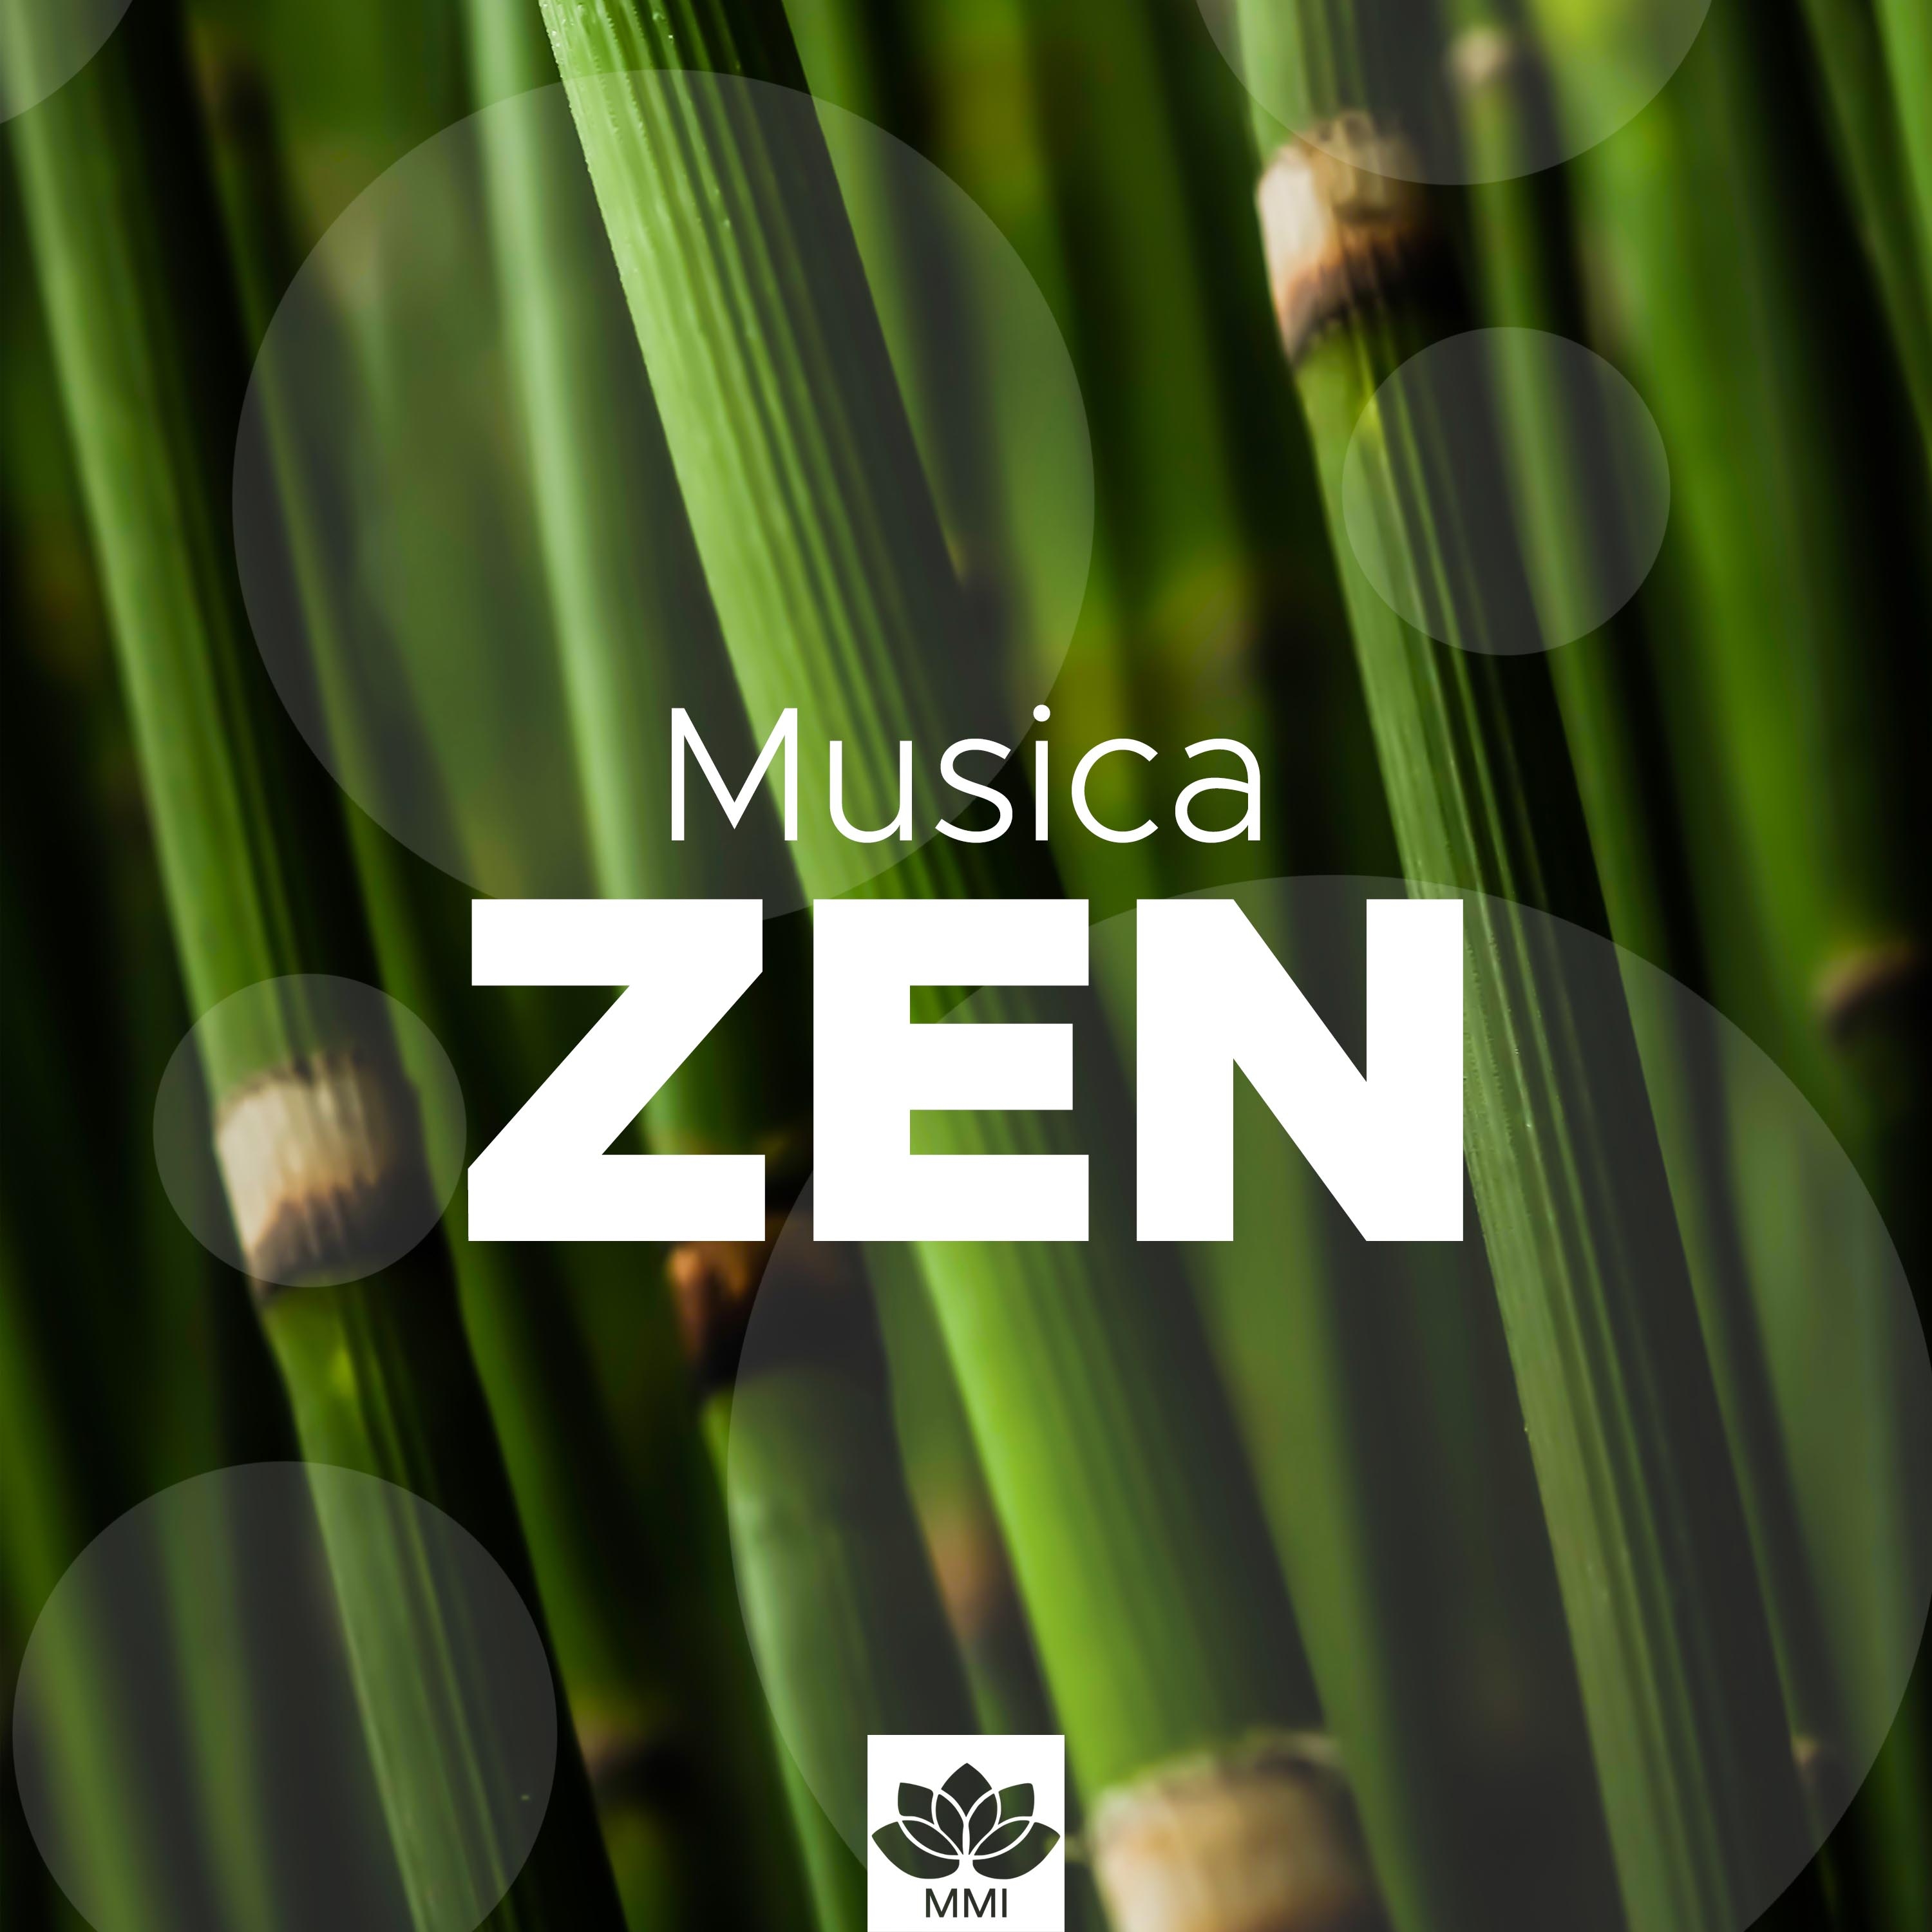 Musica Zen - Musica Orientale stile Giapponese, Tibetana, Buddista